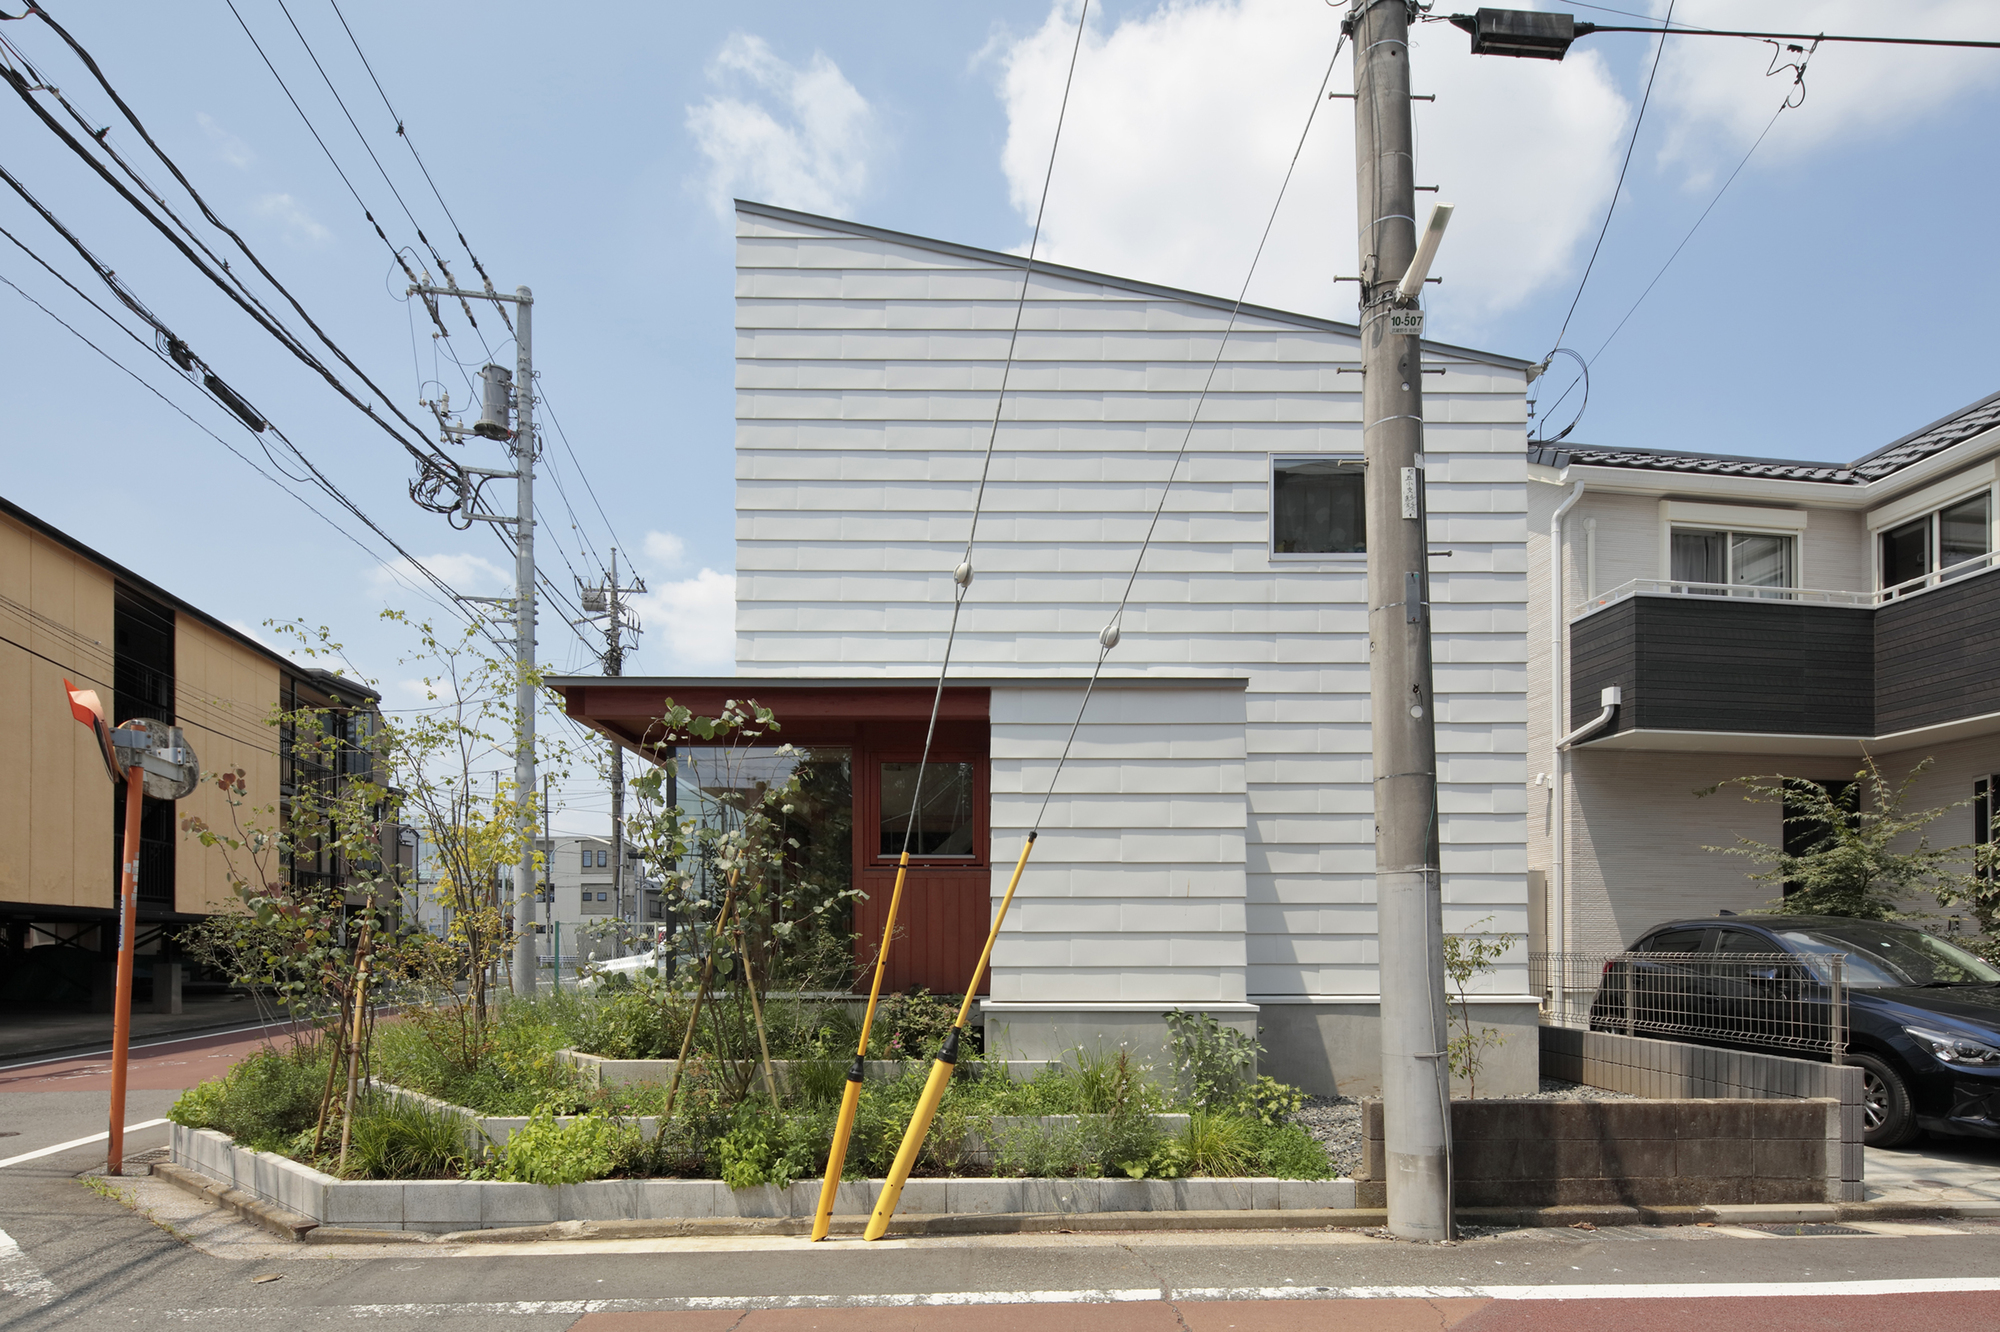 Дом Танабата / Архитектурная лаборатория Мэгуро